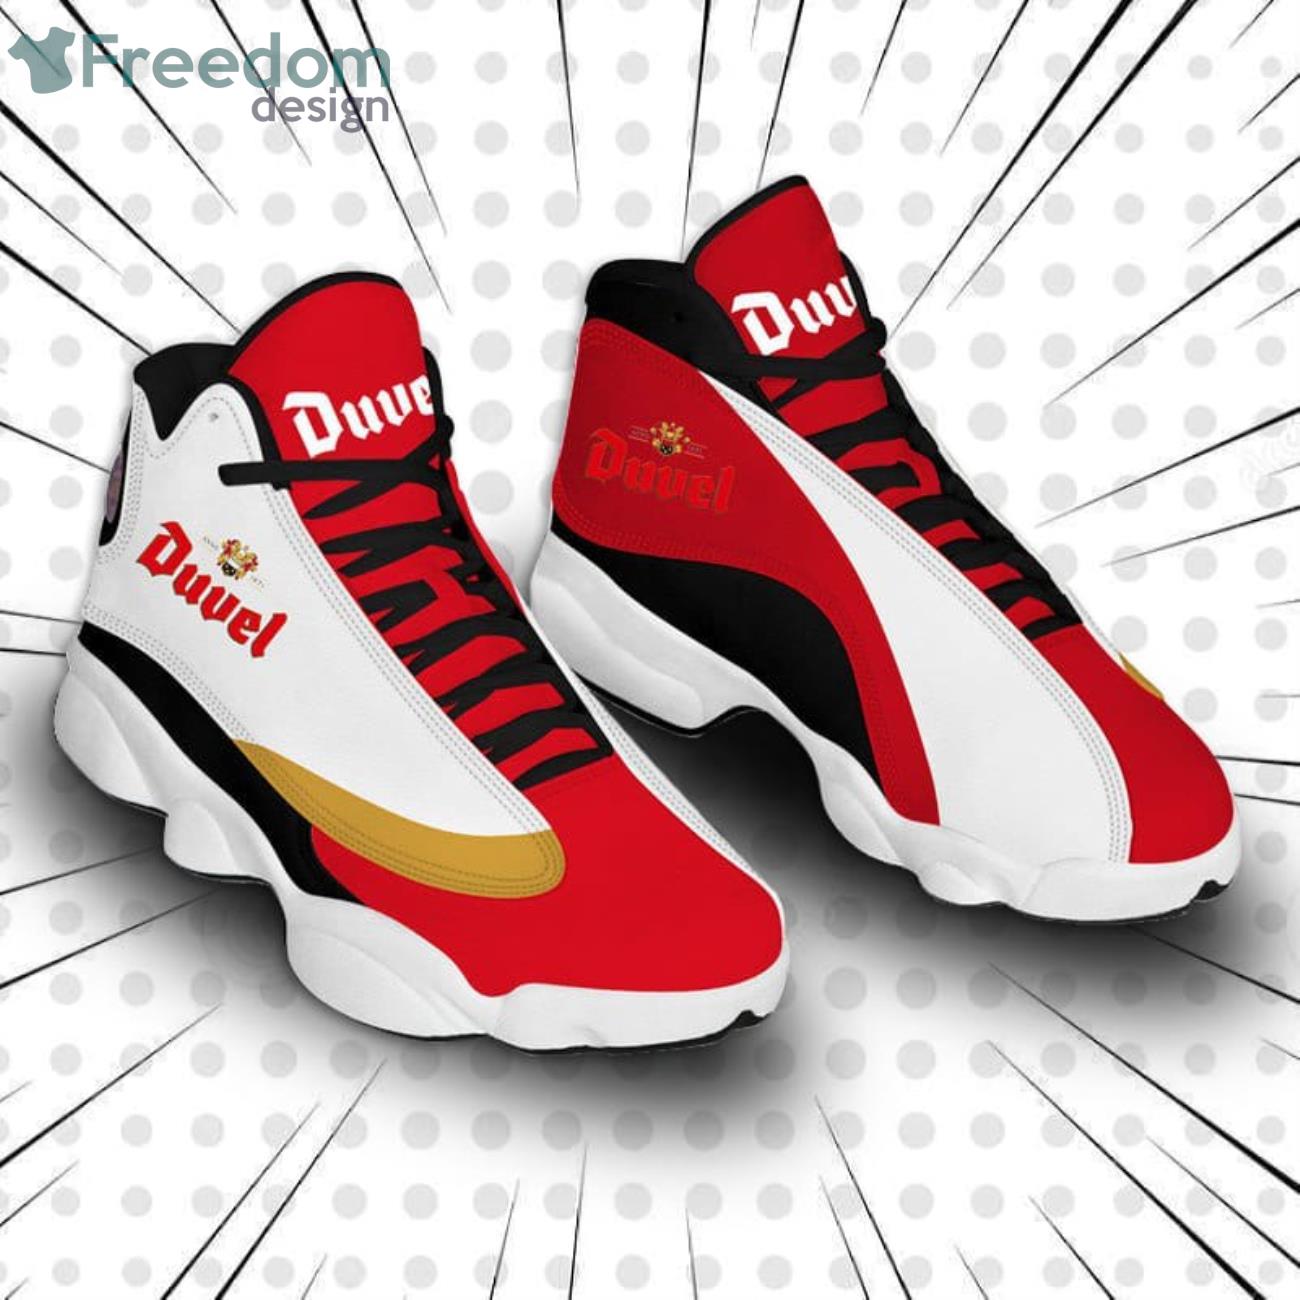 Duvel Beer Air Jordan 13 Sneakers Shoes